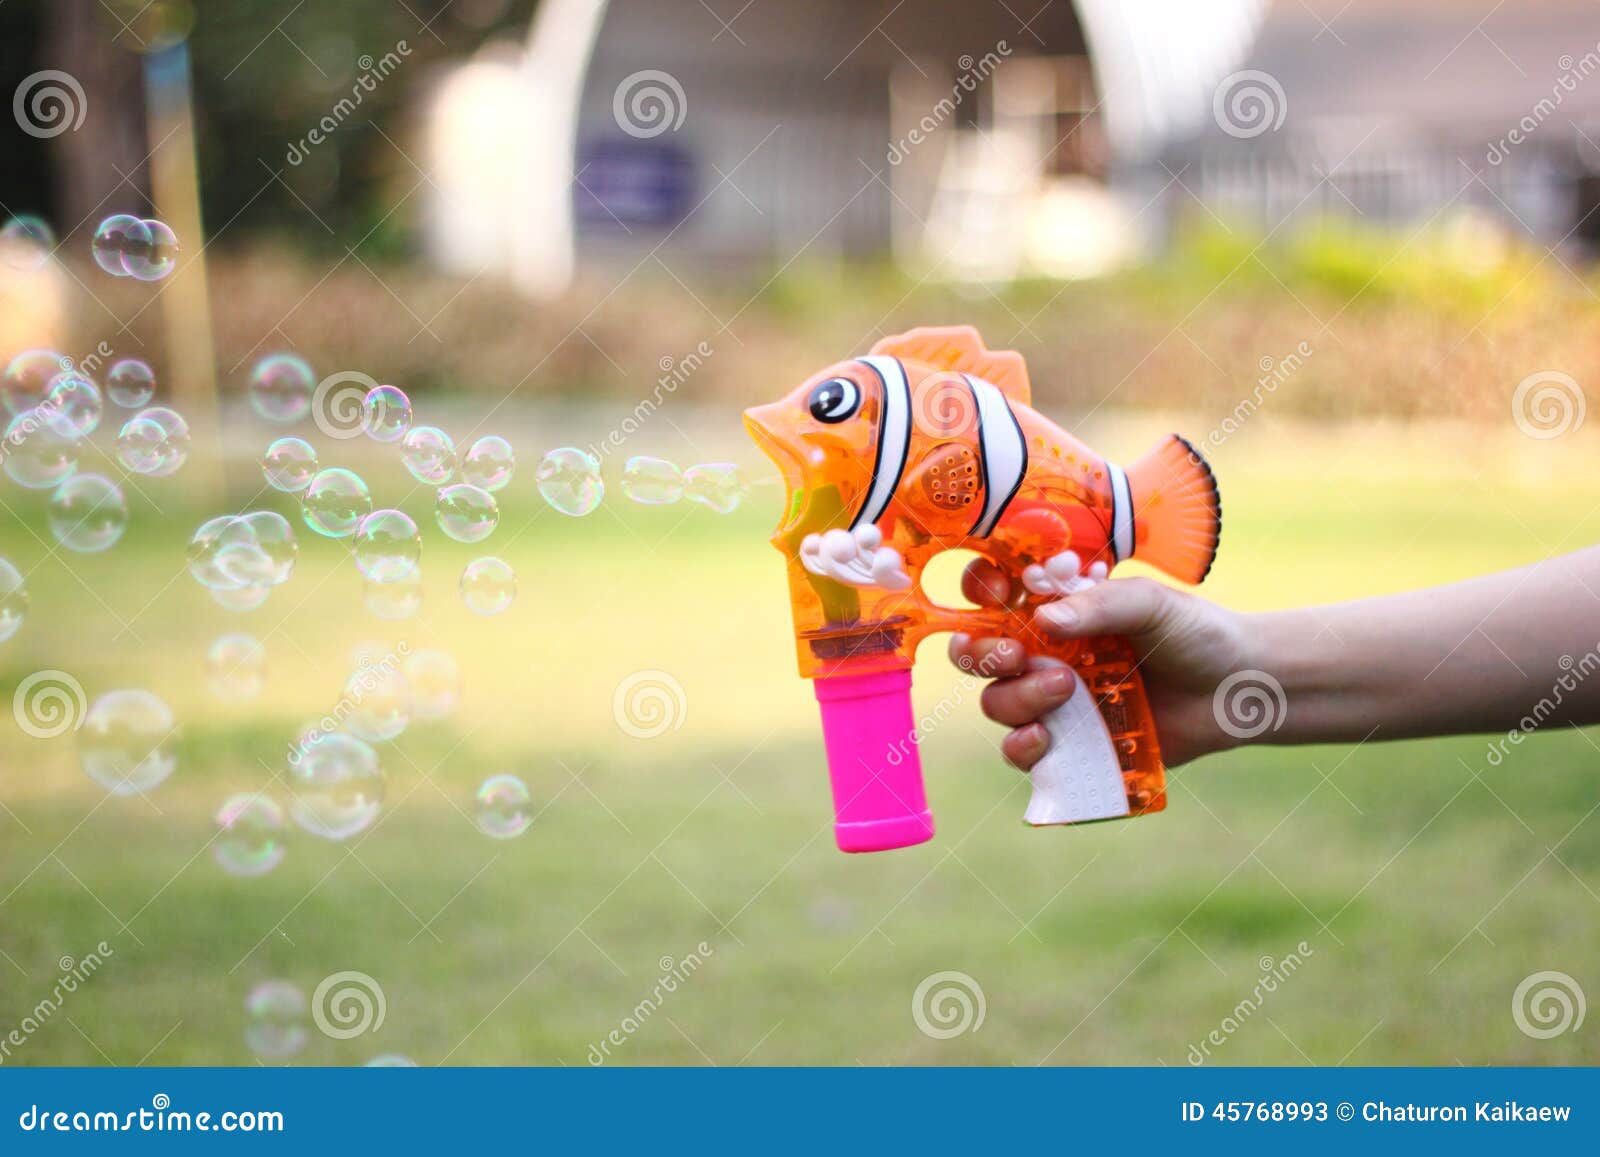 Bubble gun stock image